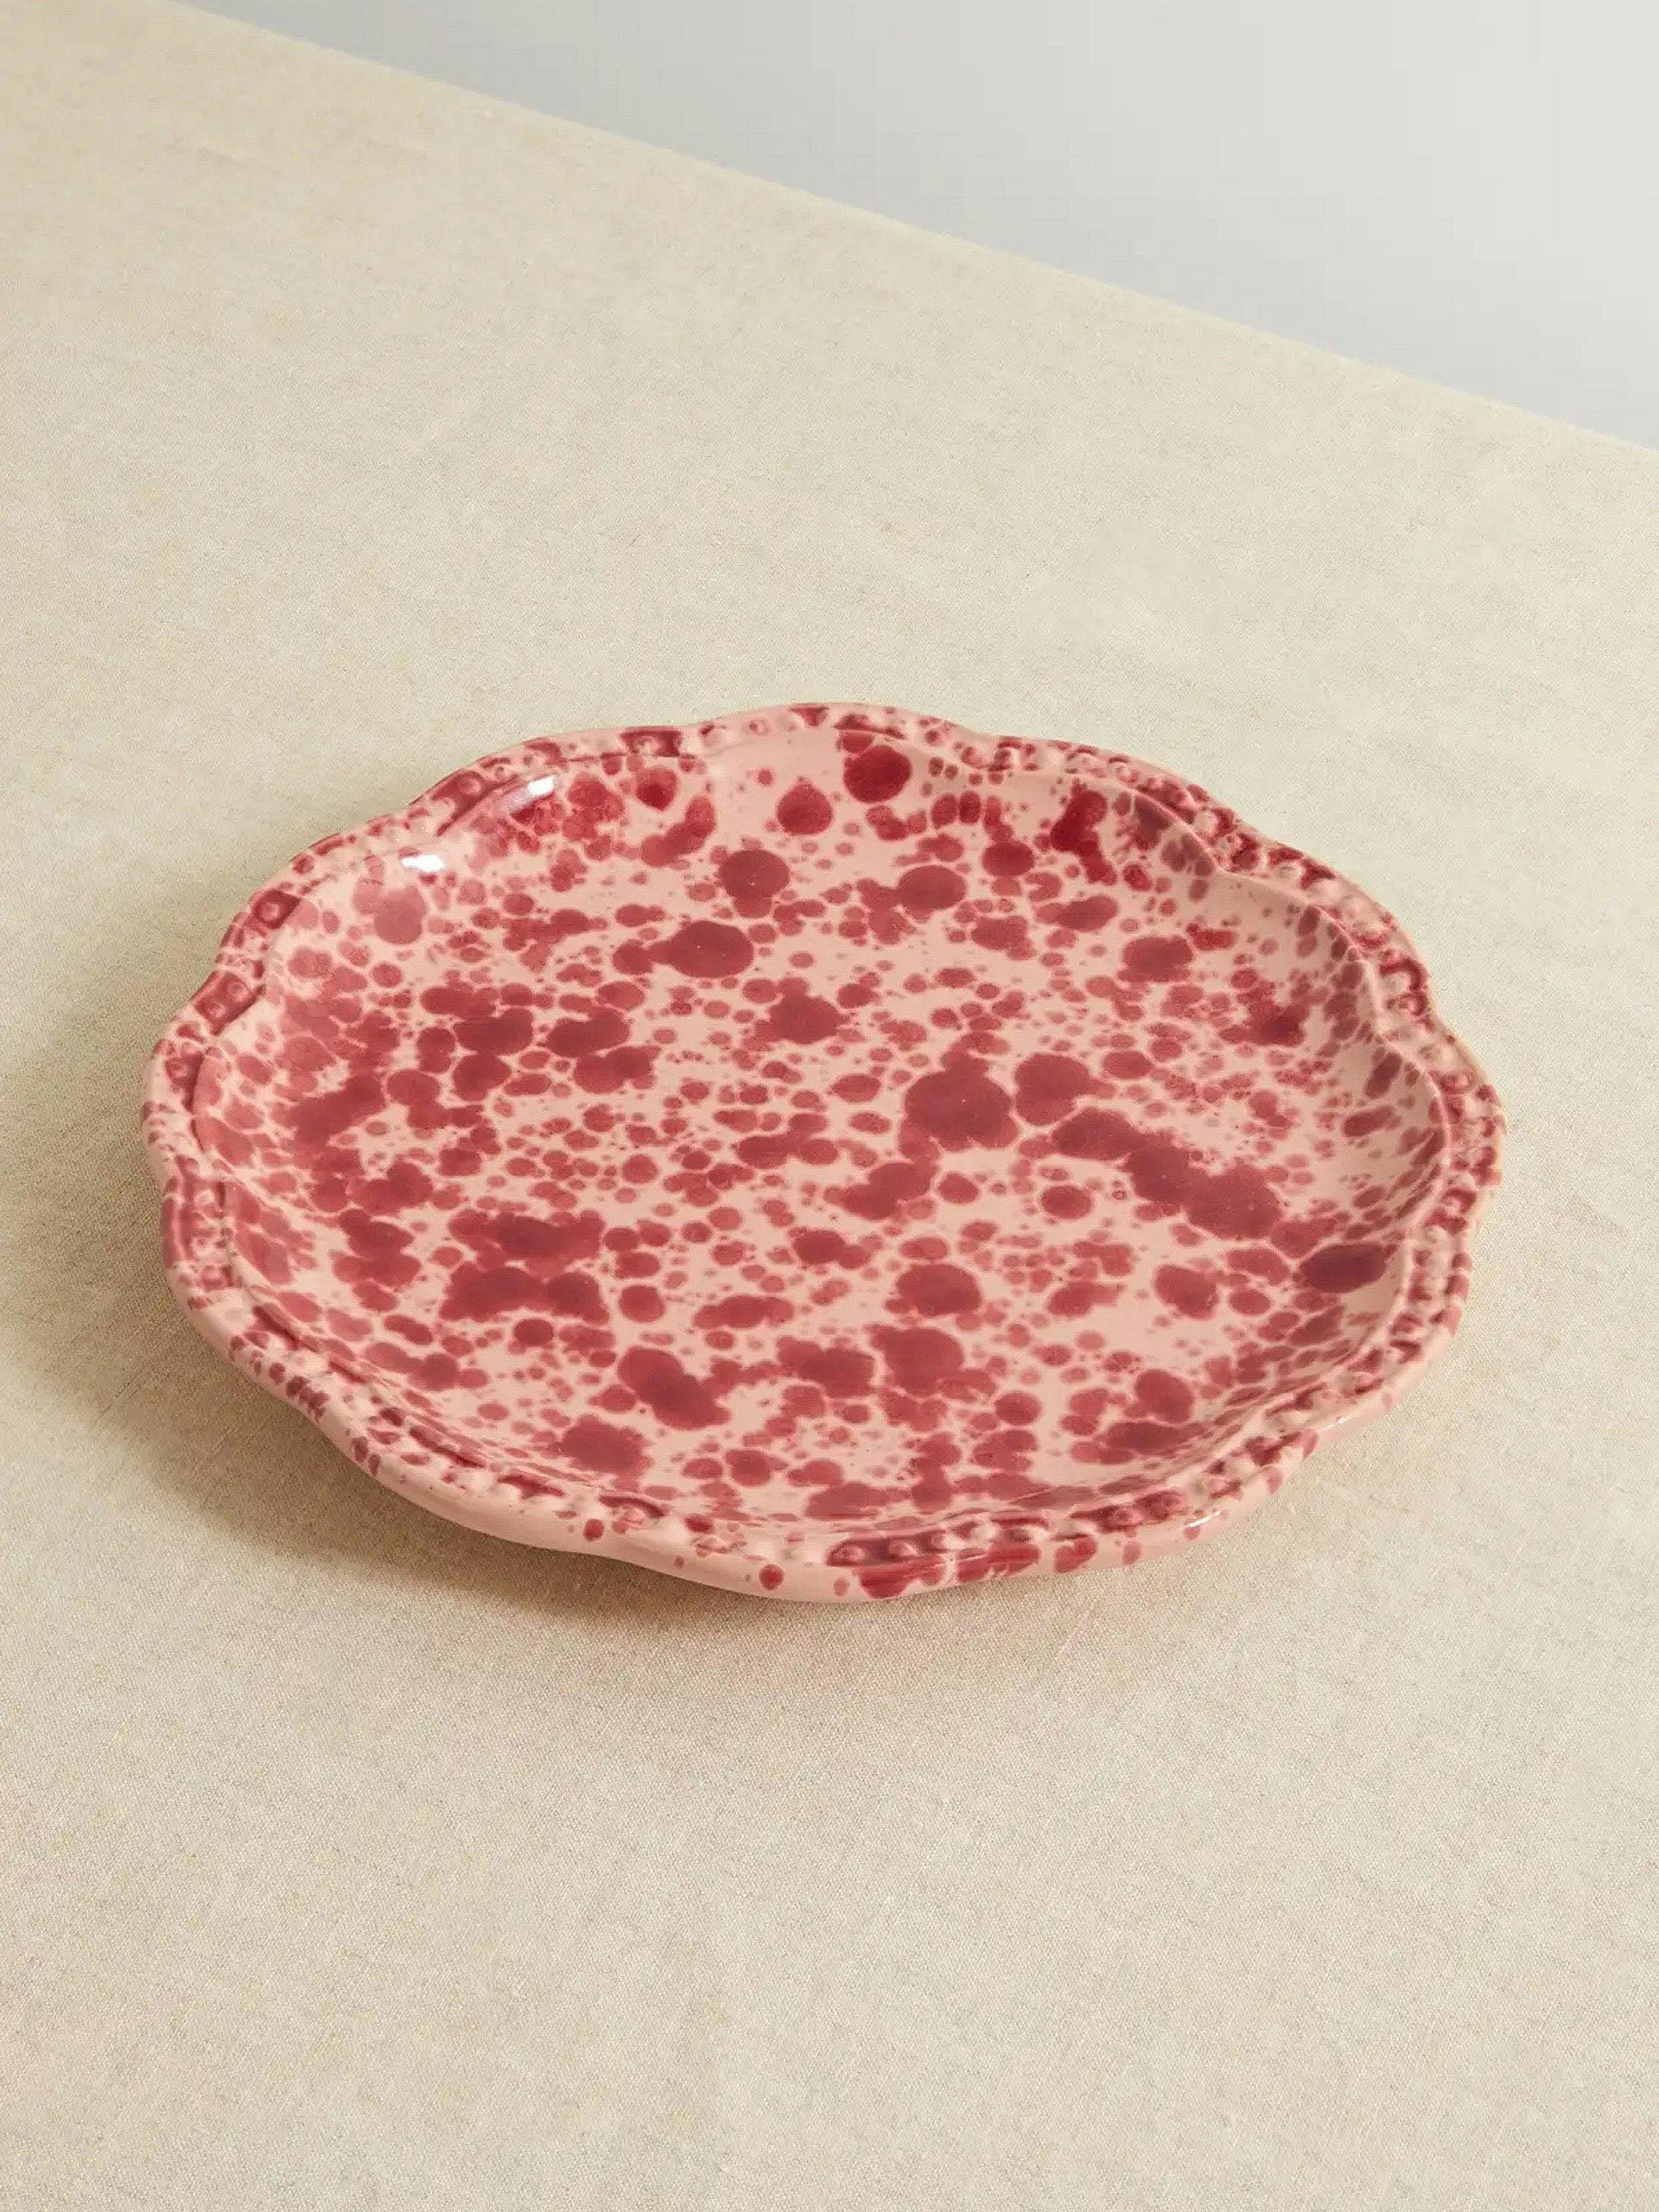 Speckled ceramic dessert plate